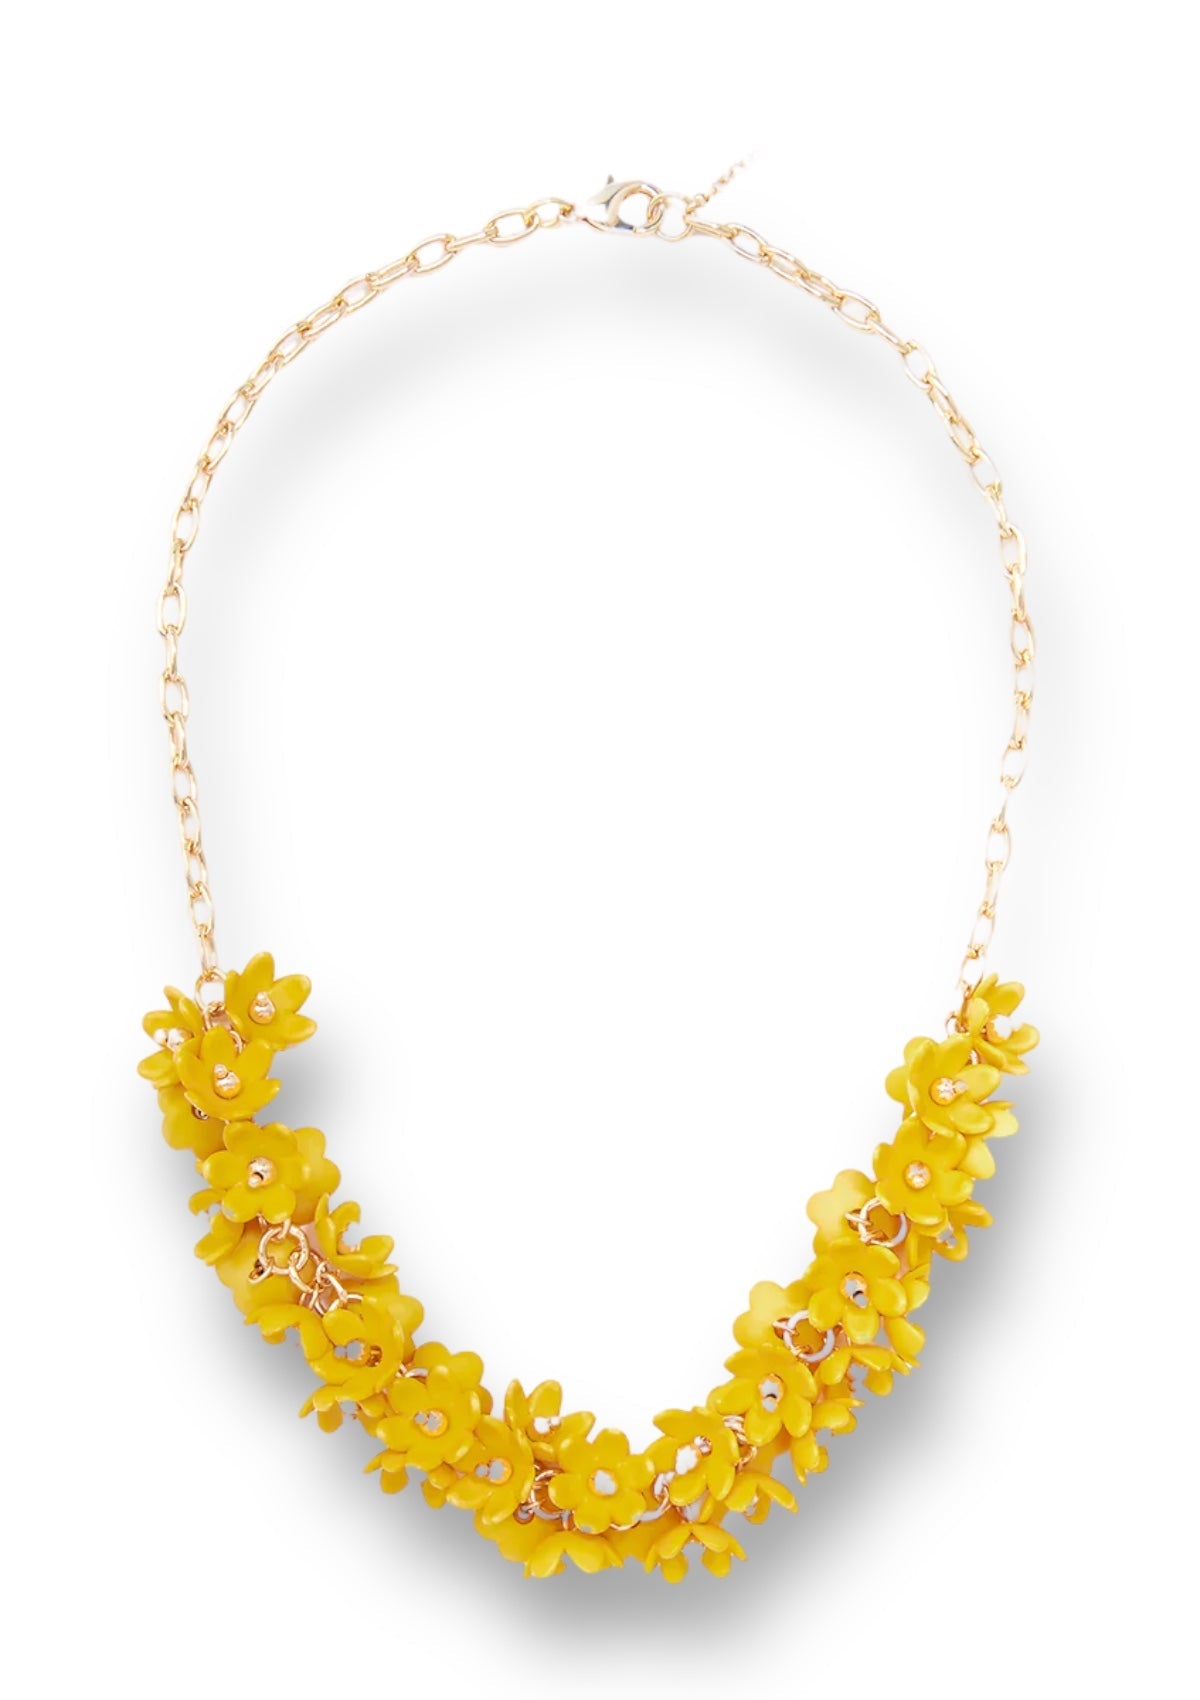 petite-petals-collar-necklace-accessories-jewelry-necklaces-georgia-kate